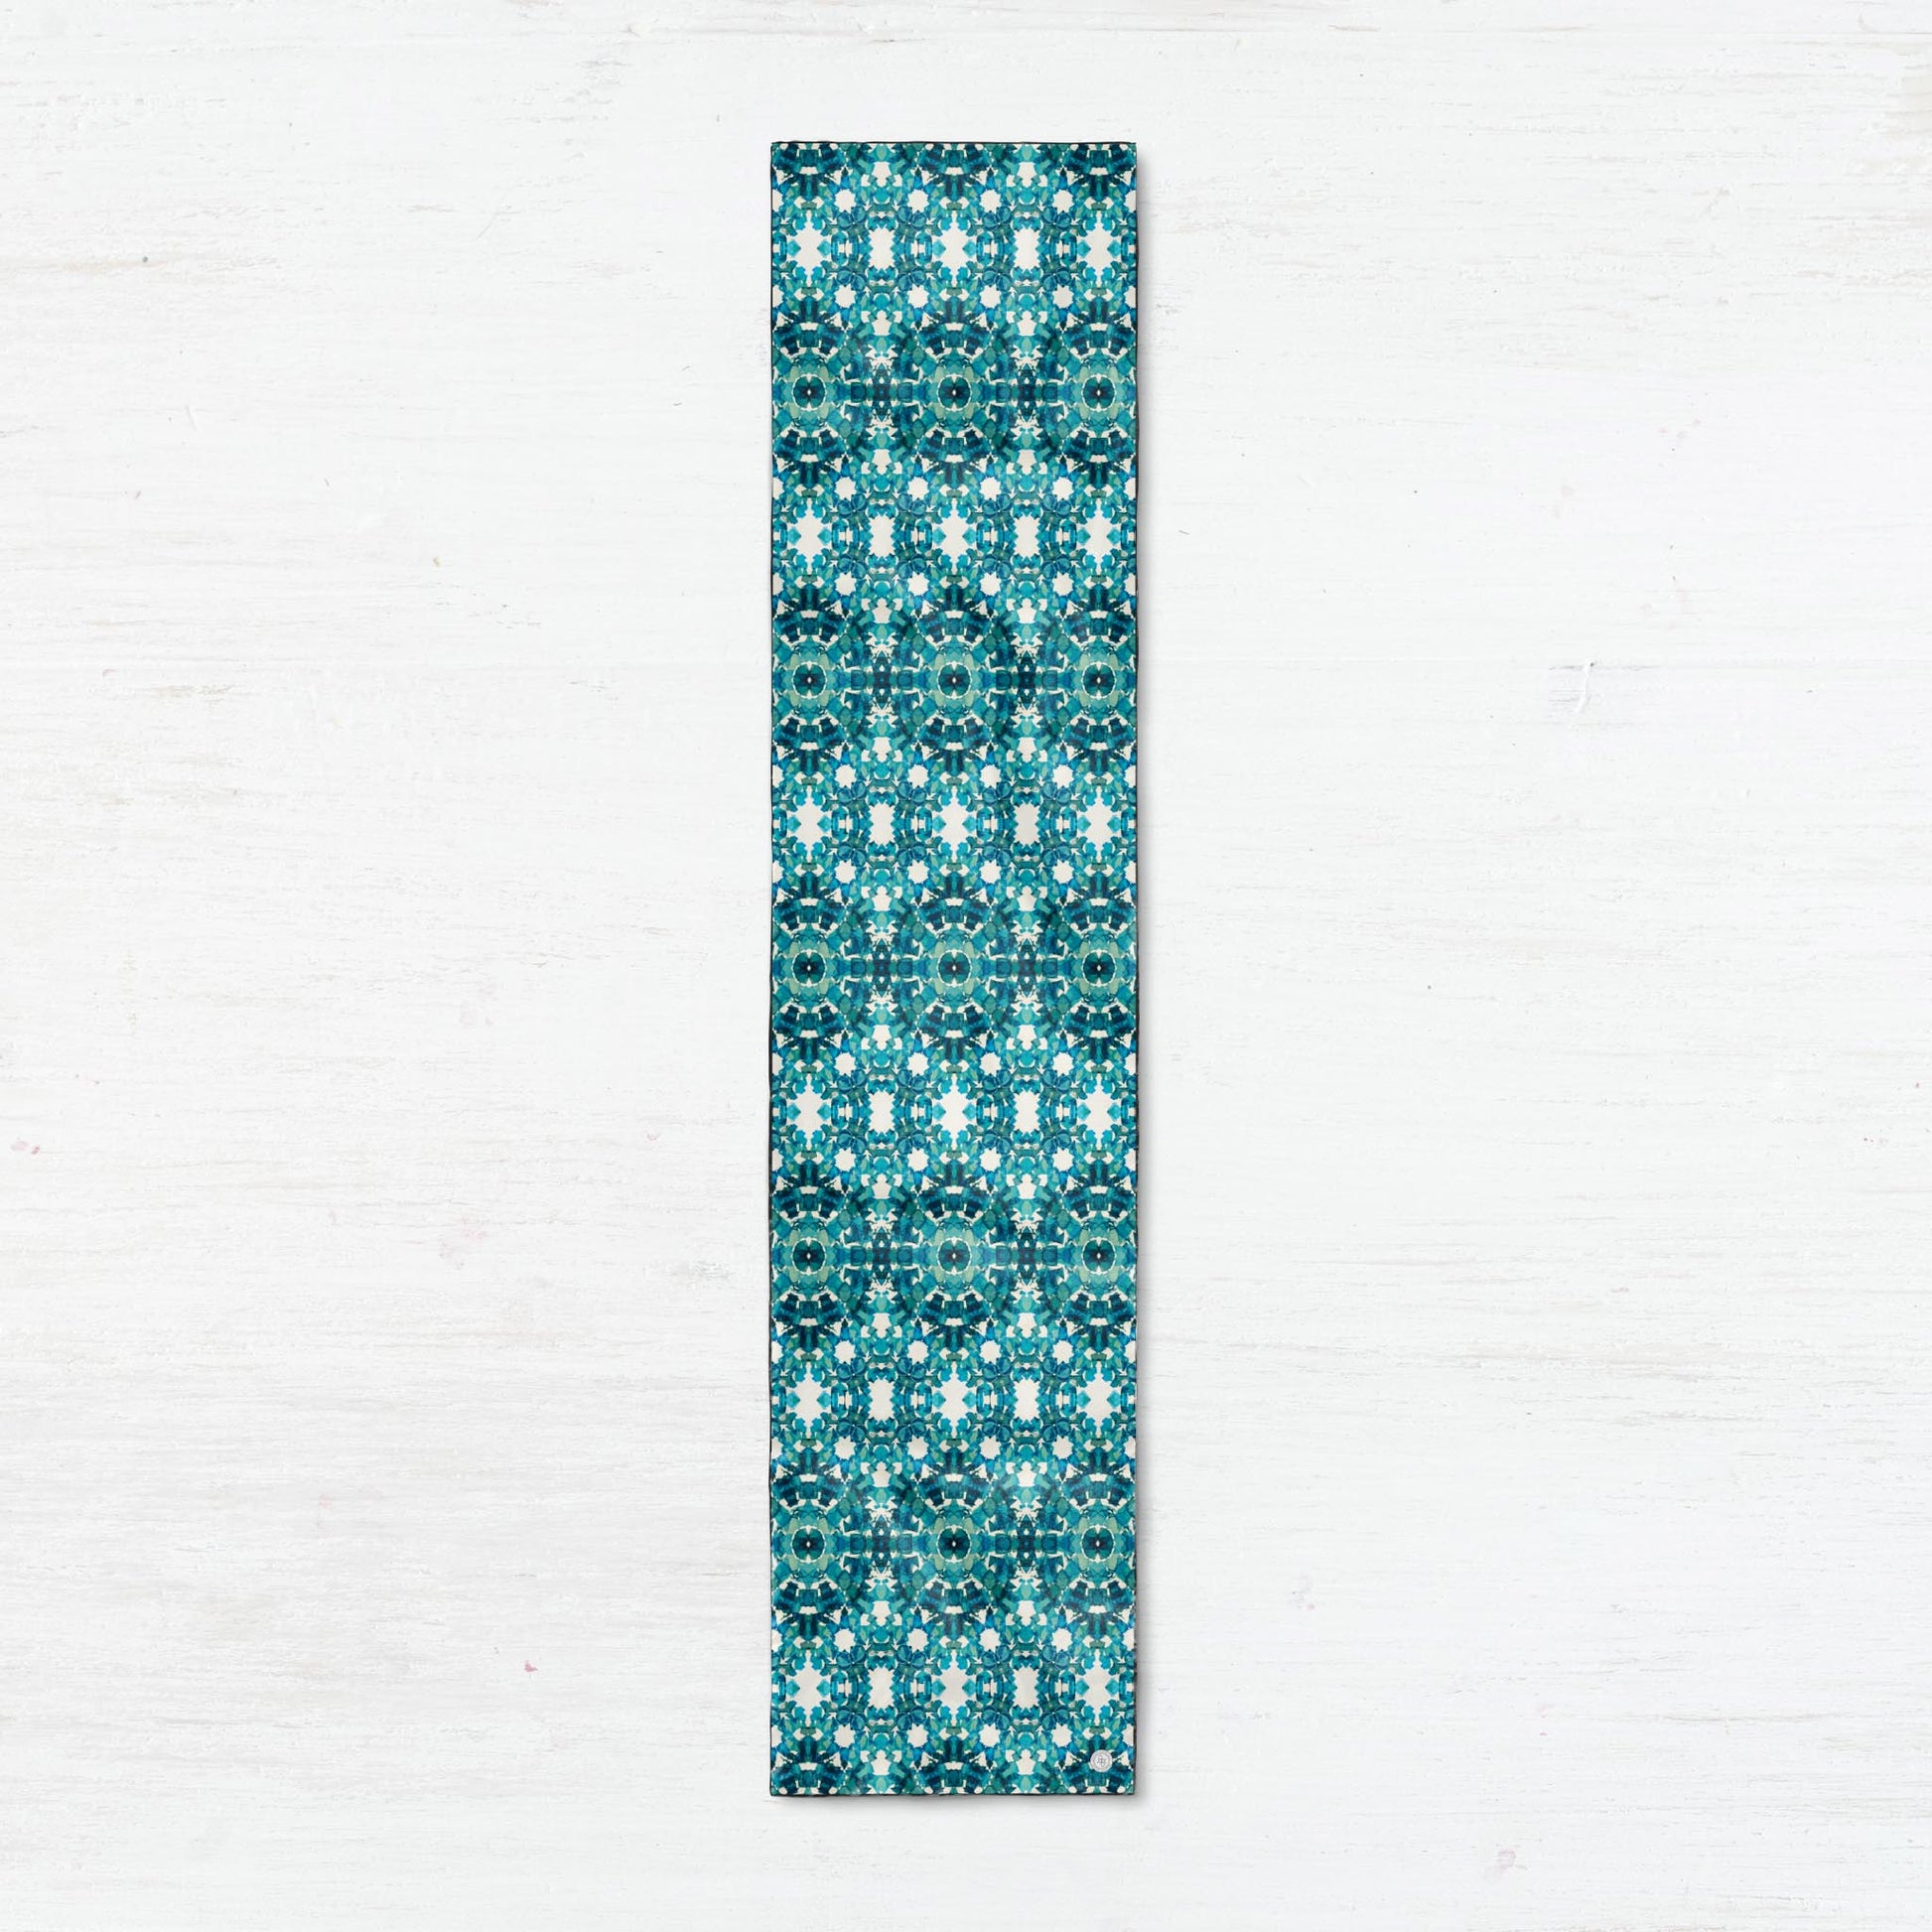 Rectangular silk scarf, featuring an abstract teal pattern